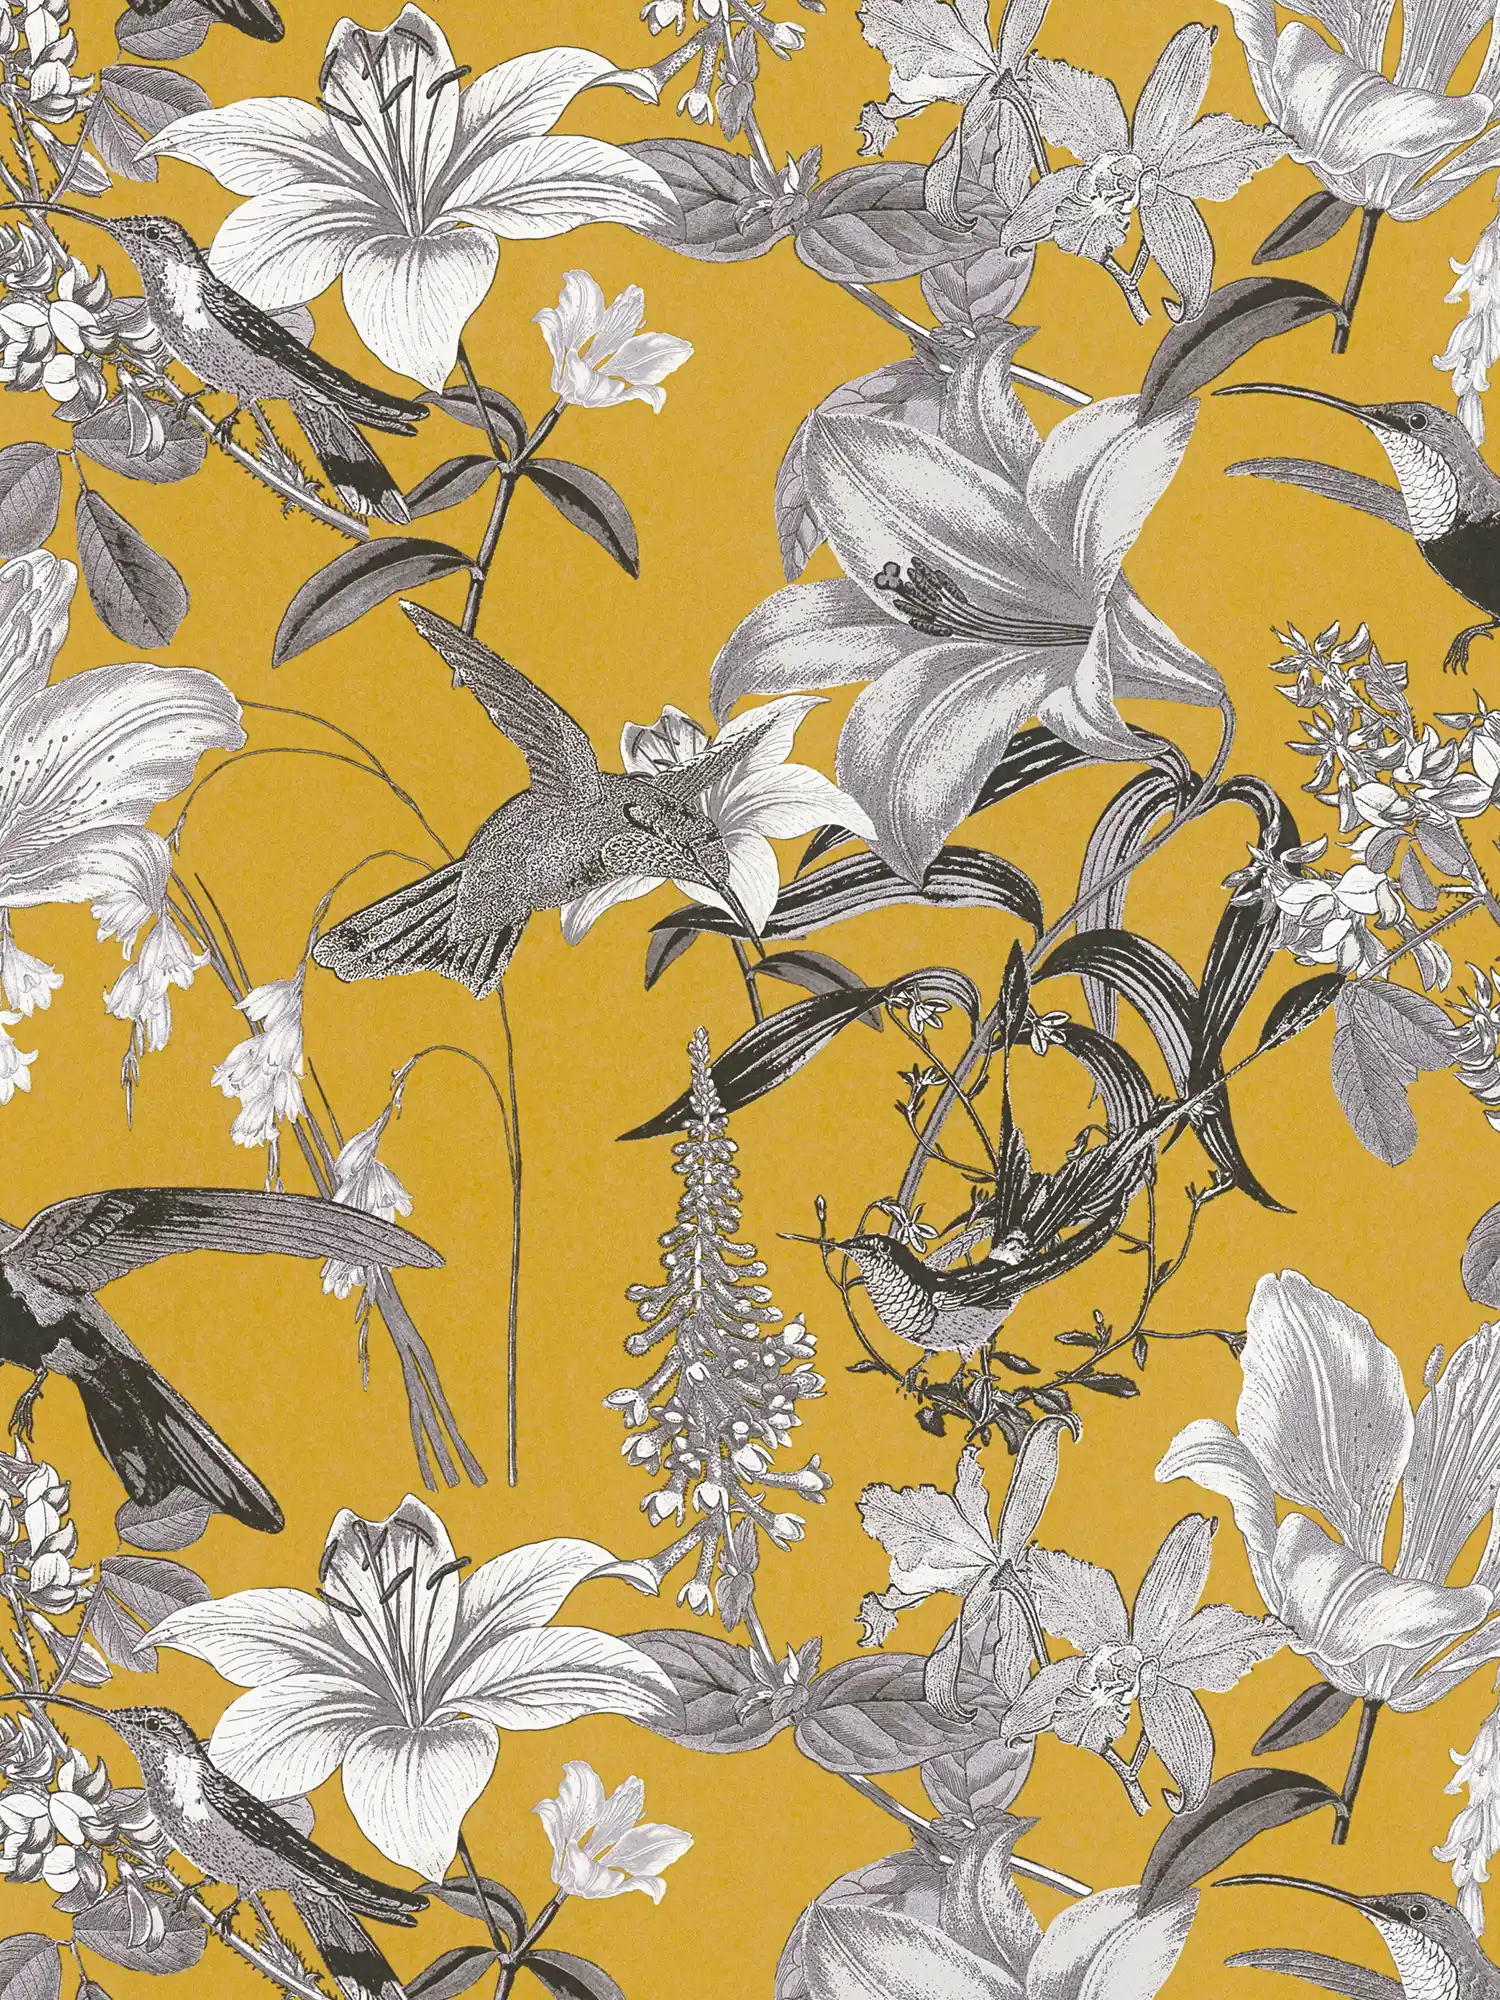 Flowers wallpaper mustard yellow with flowers & hummingbird pattern - yellow, grey, black
